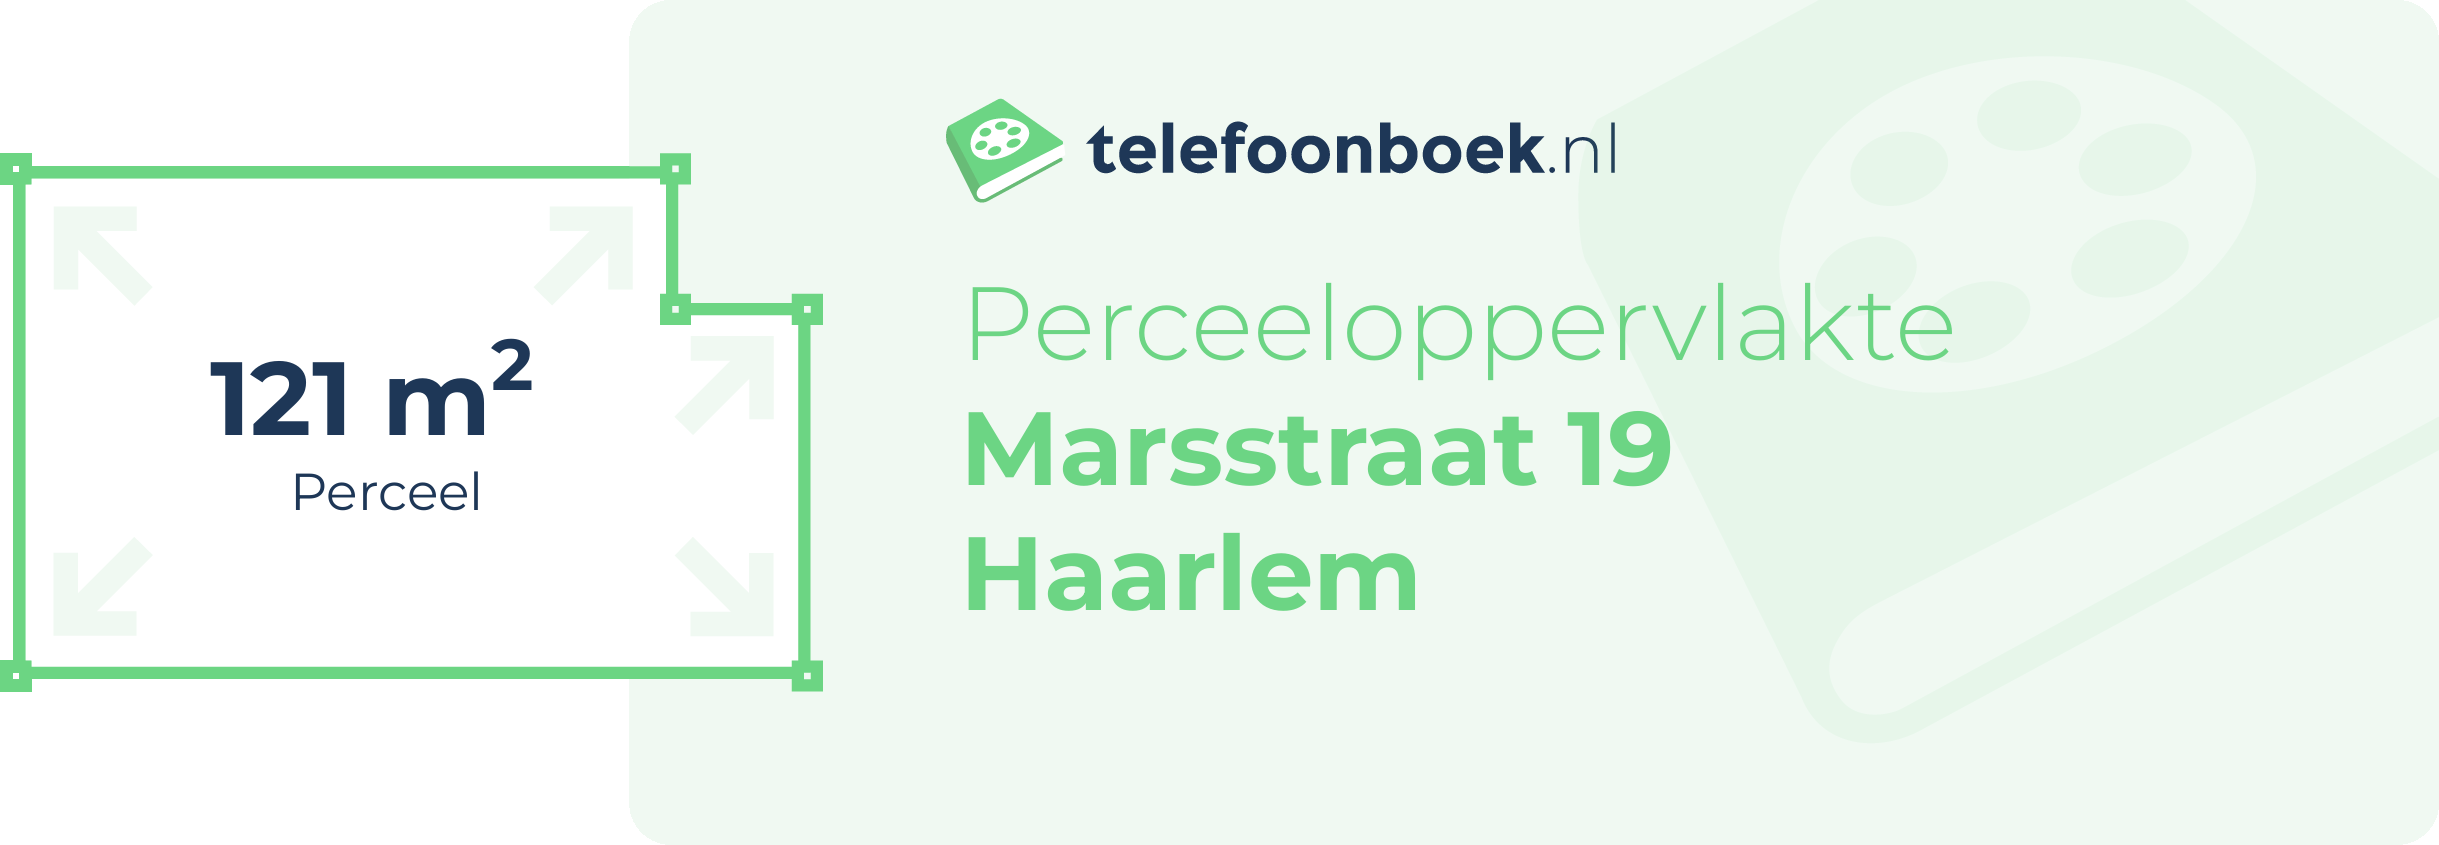 Perceeloppervlakte Marsstraat 19 Haarlem